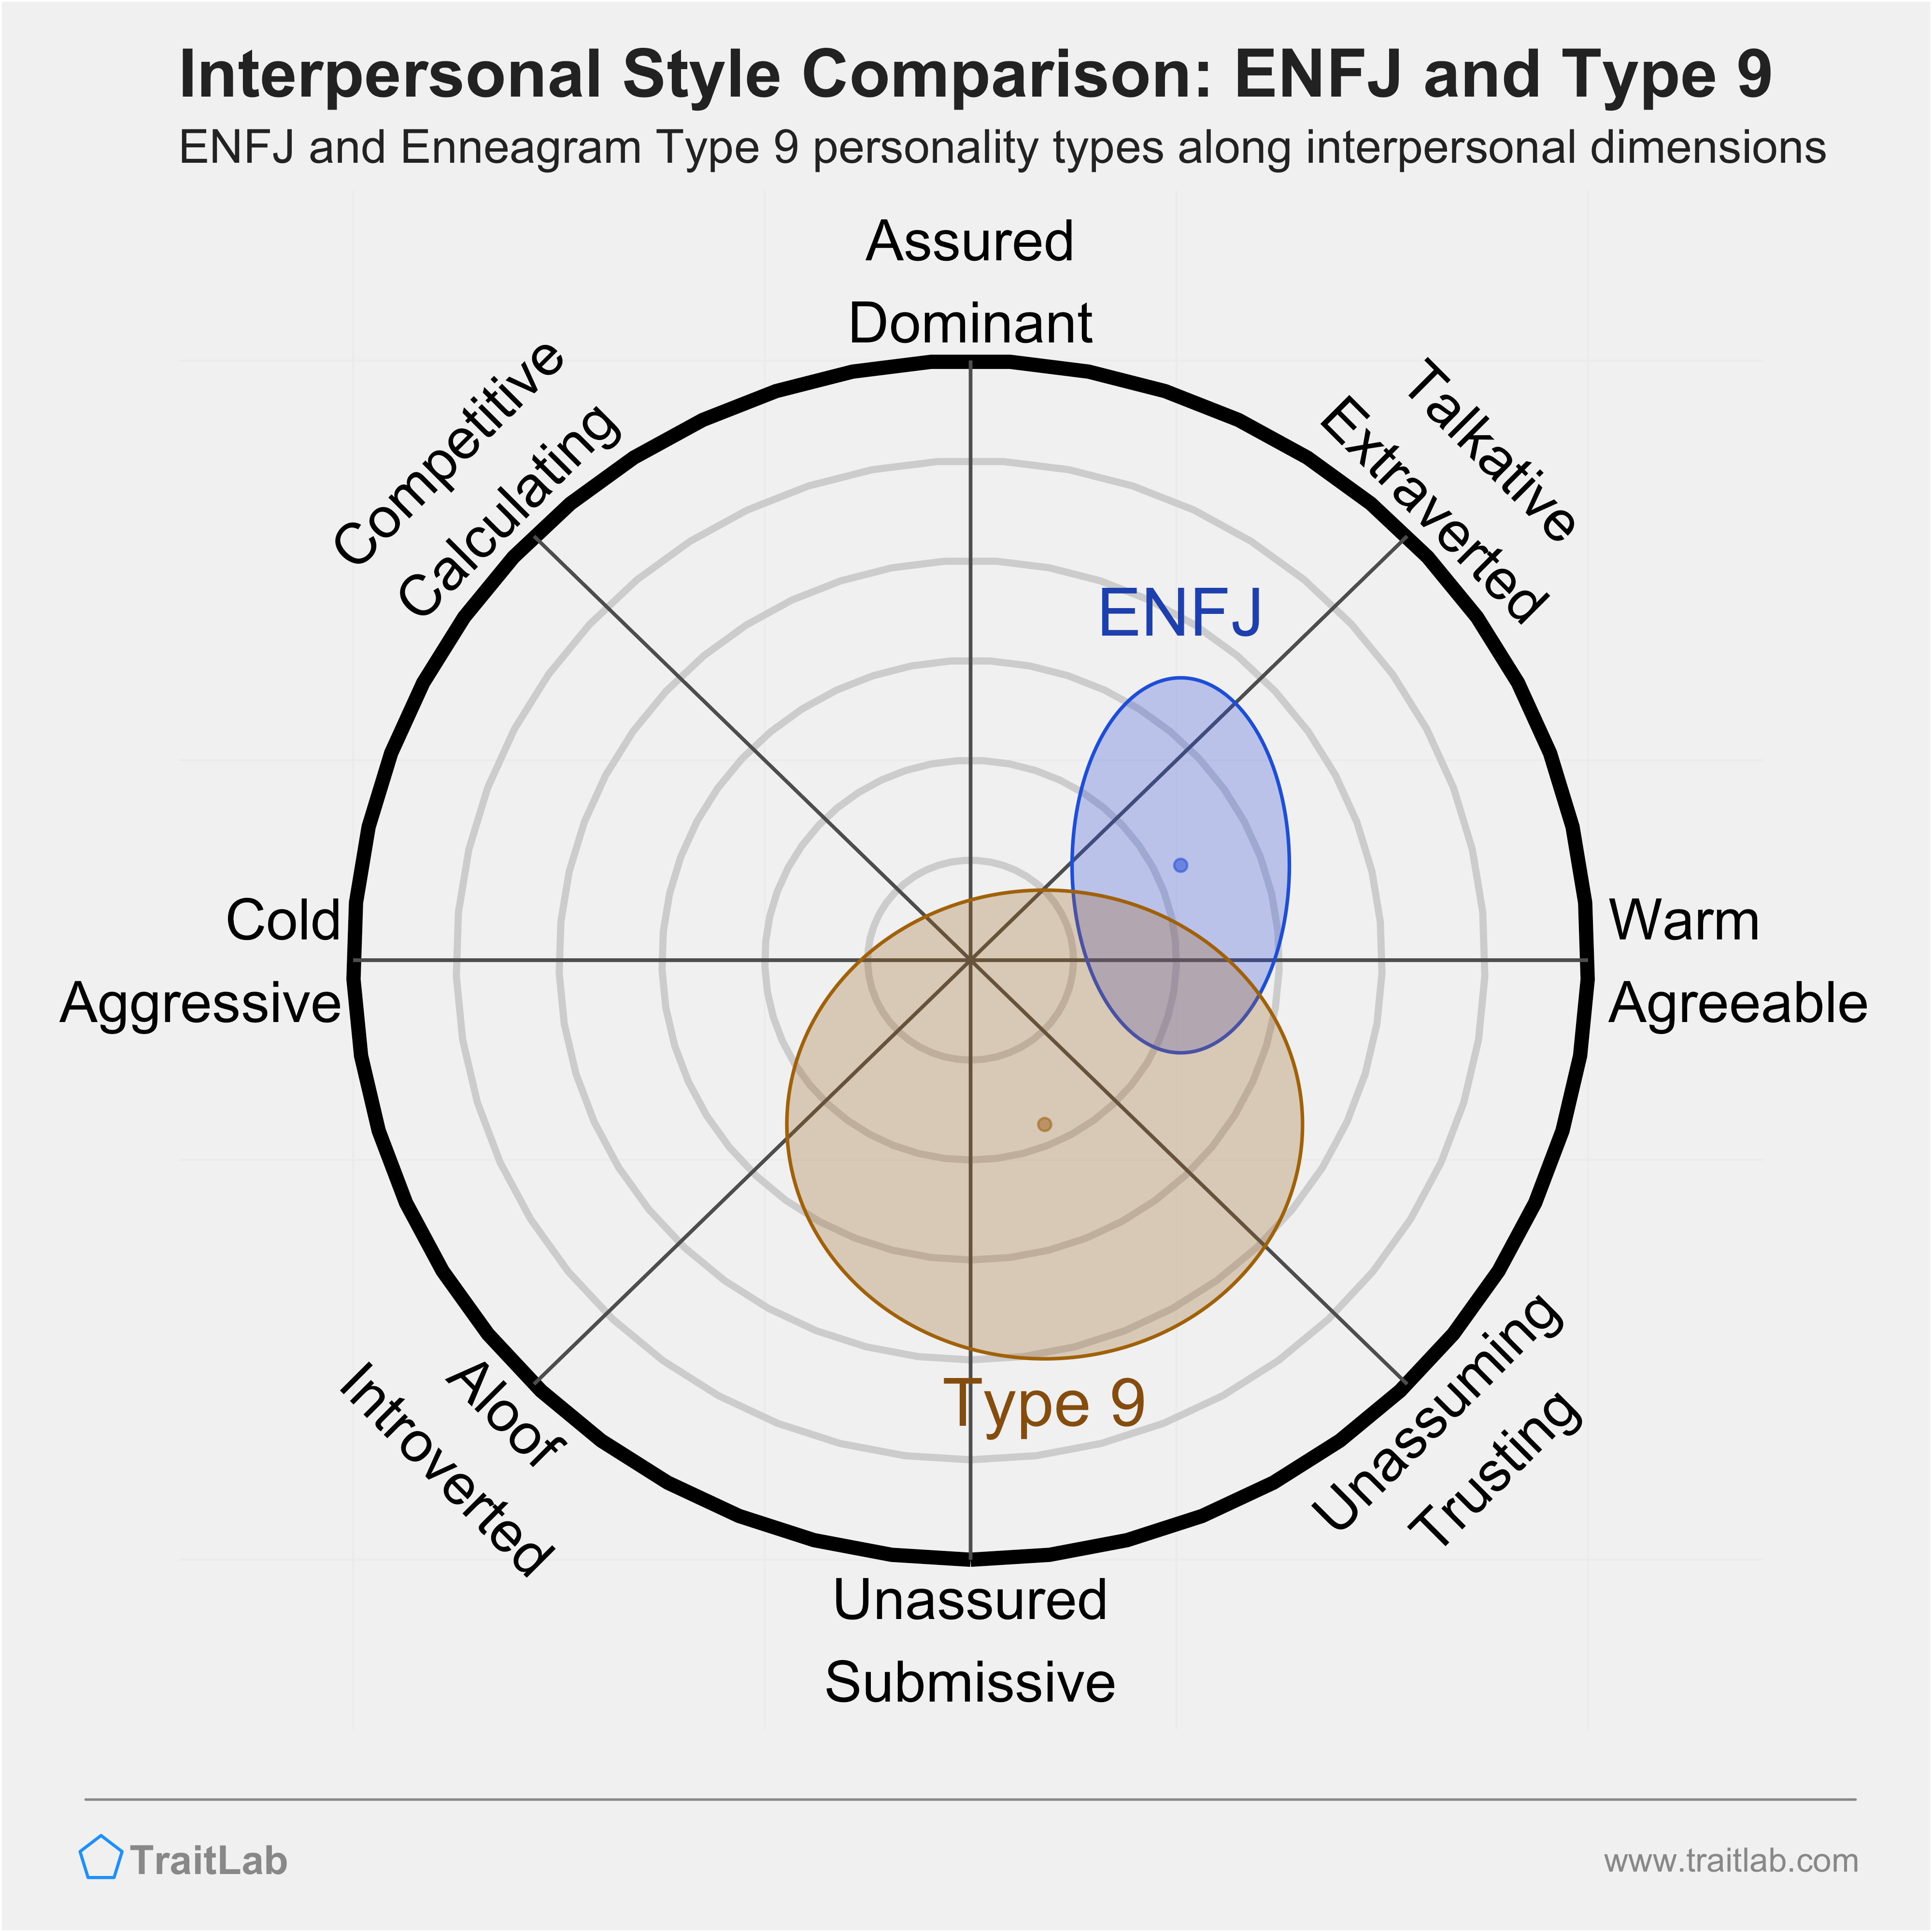 Enneagram ENFJ and Type 9 comparison across interpersonal dimensions